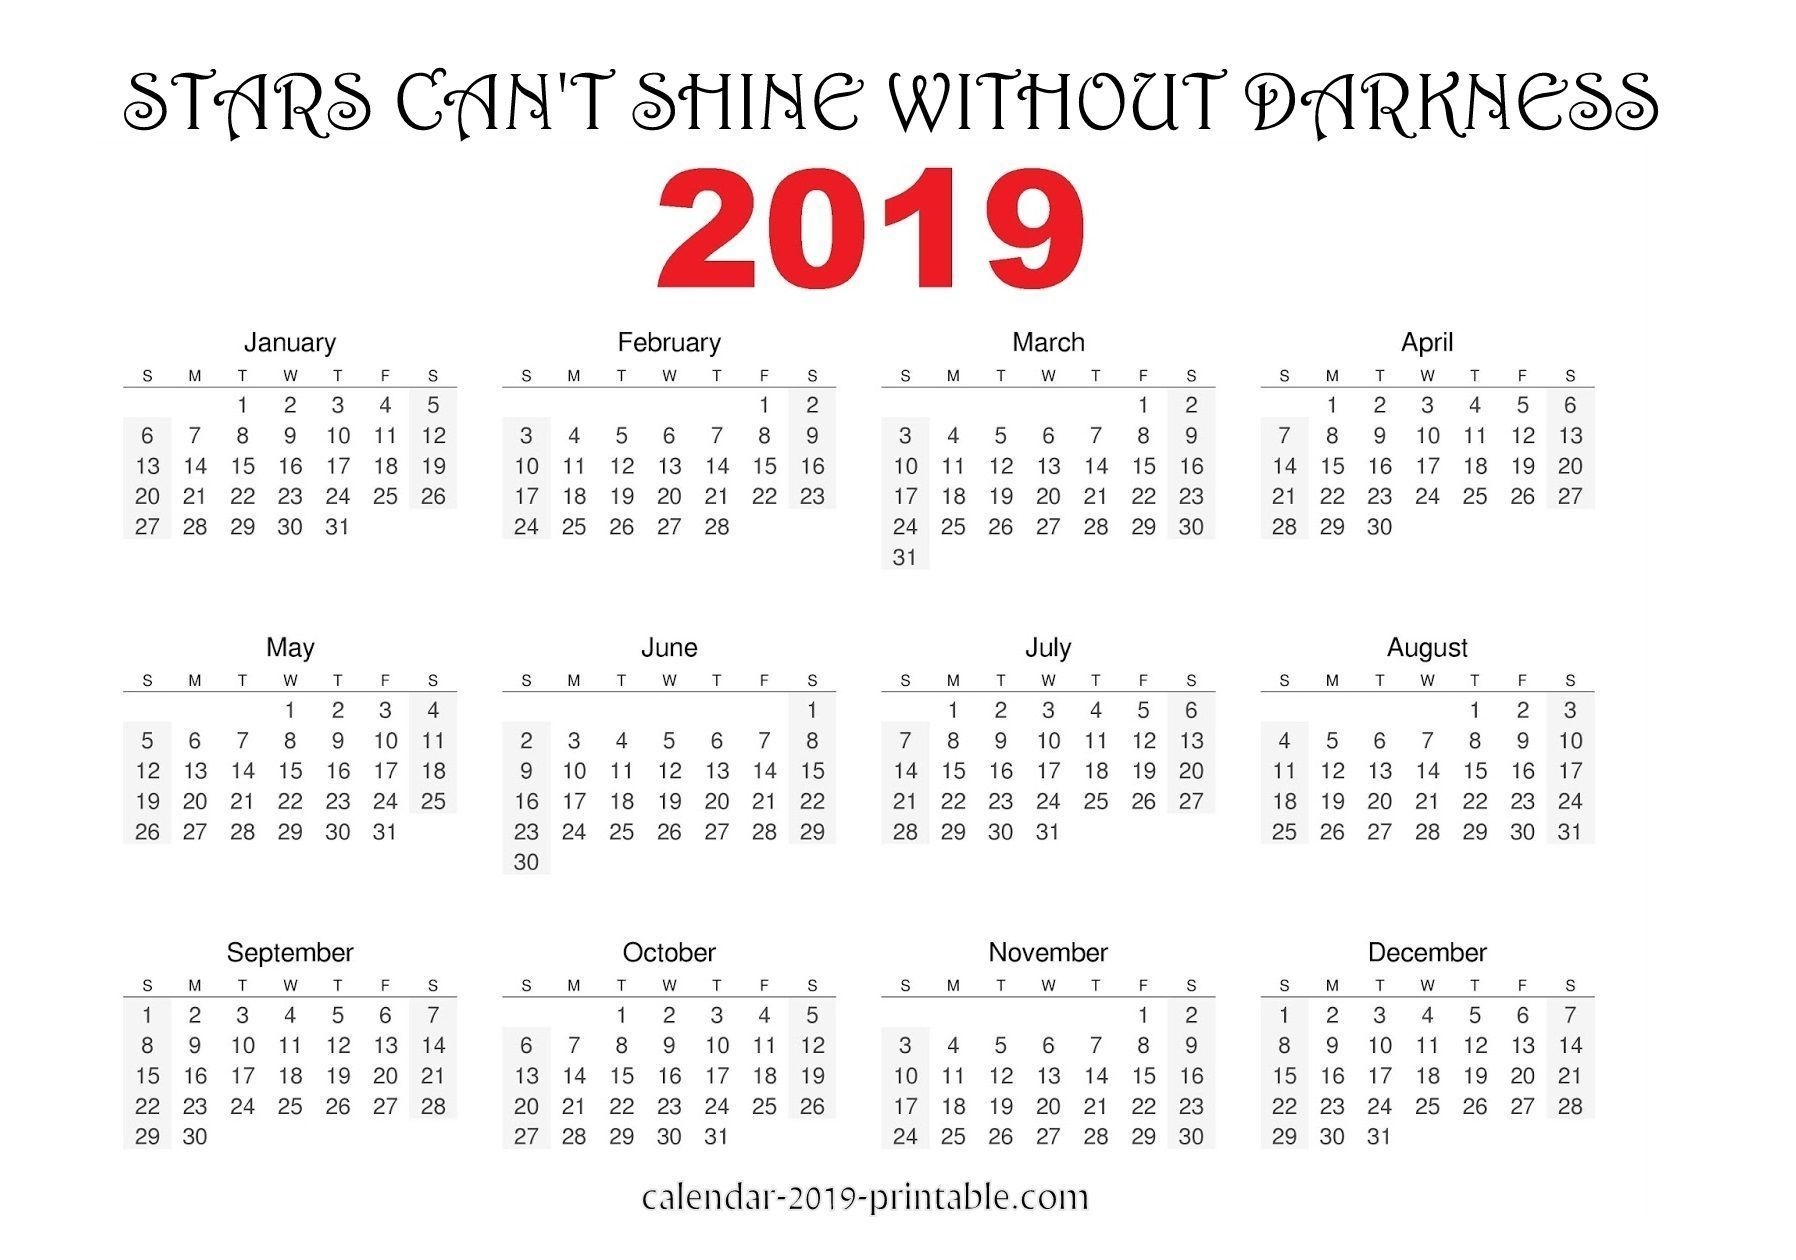 2019 Inspirational Quotes Monthly Calendar | Inspirational